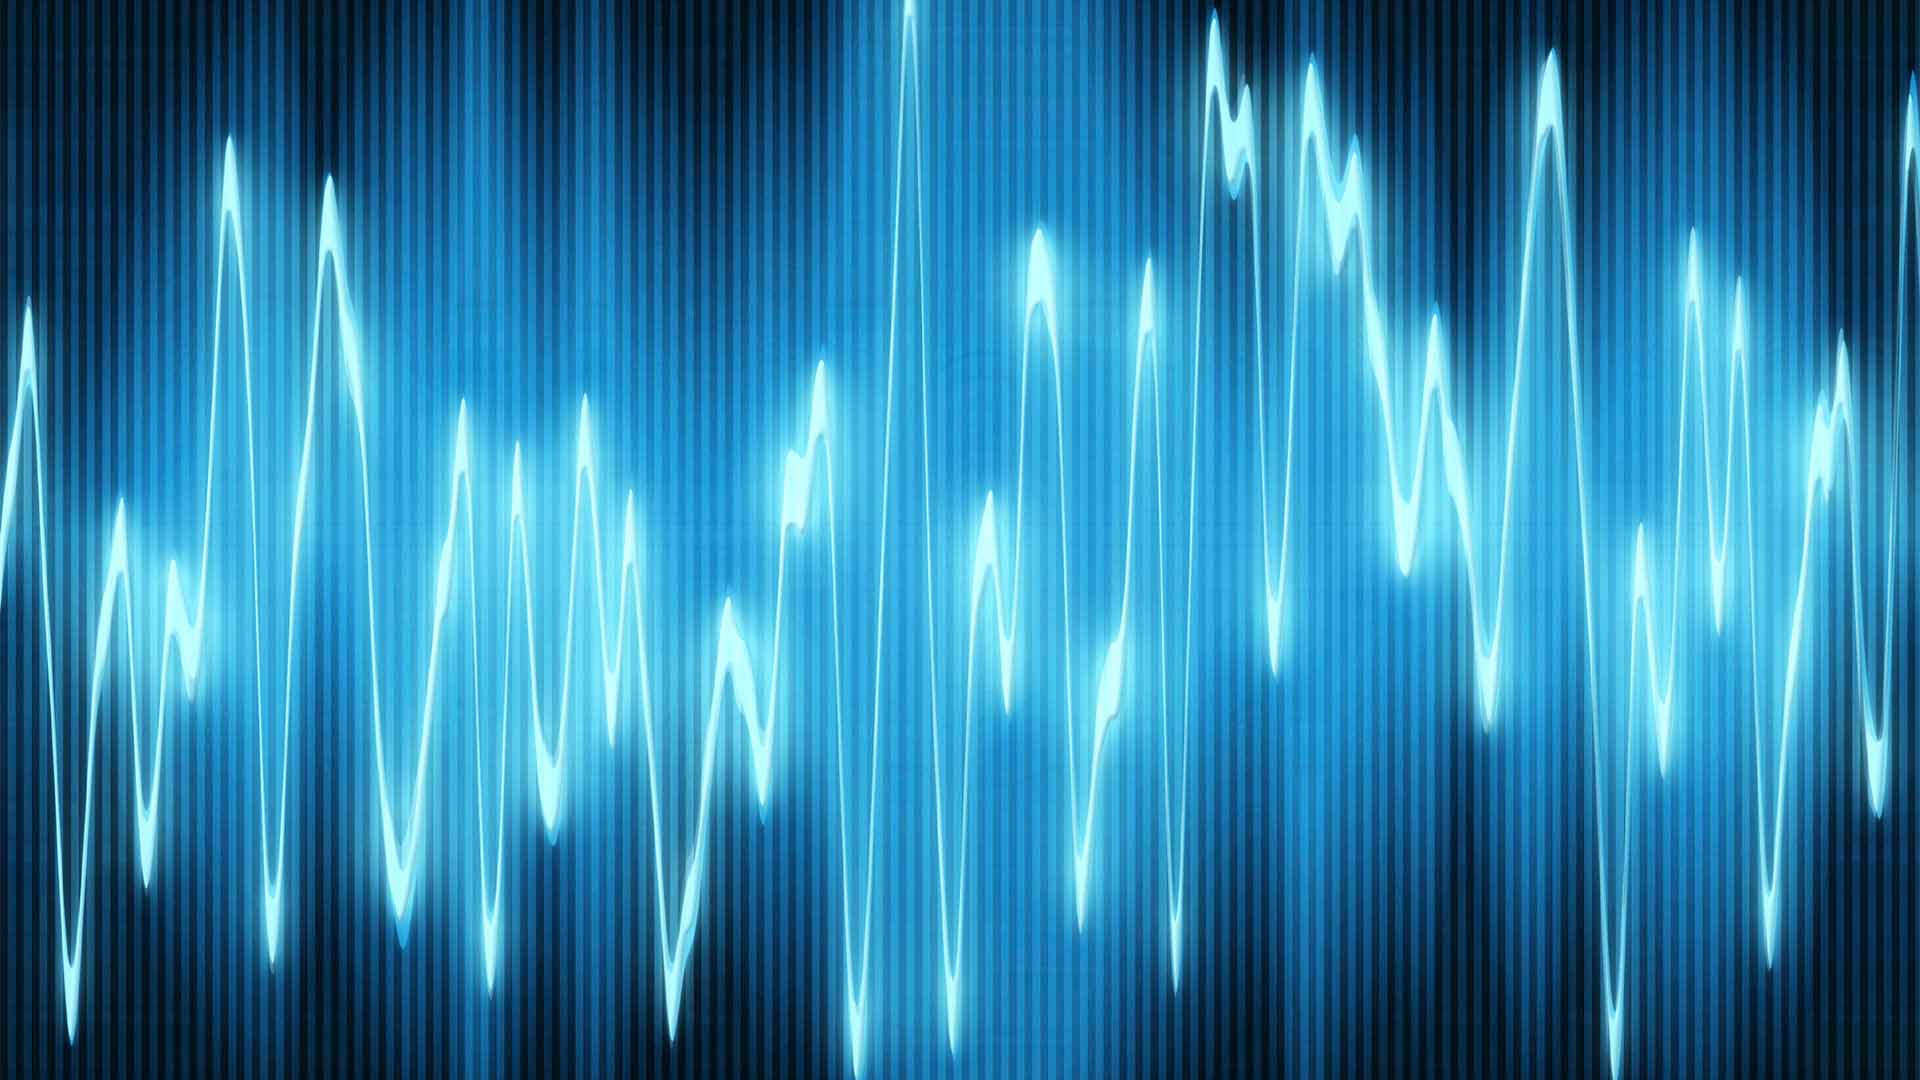 Blue soundwaves